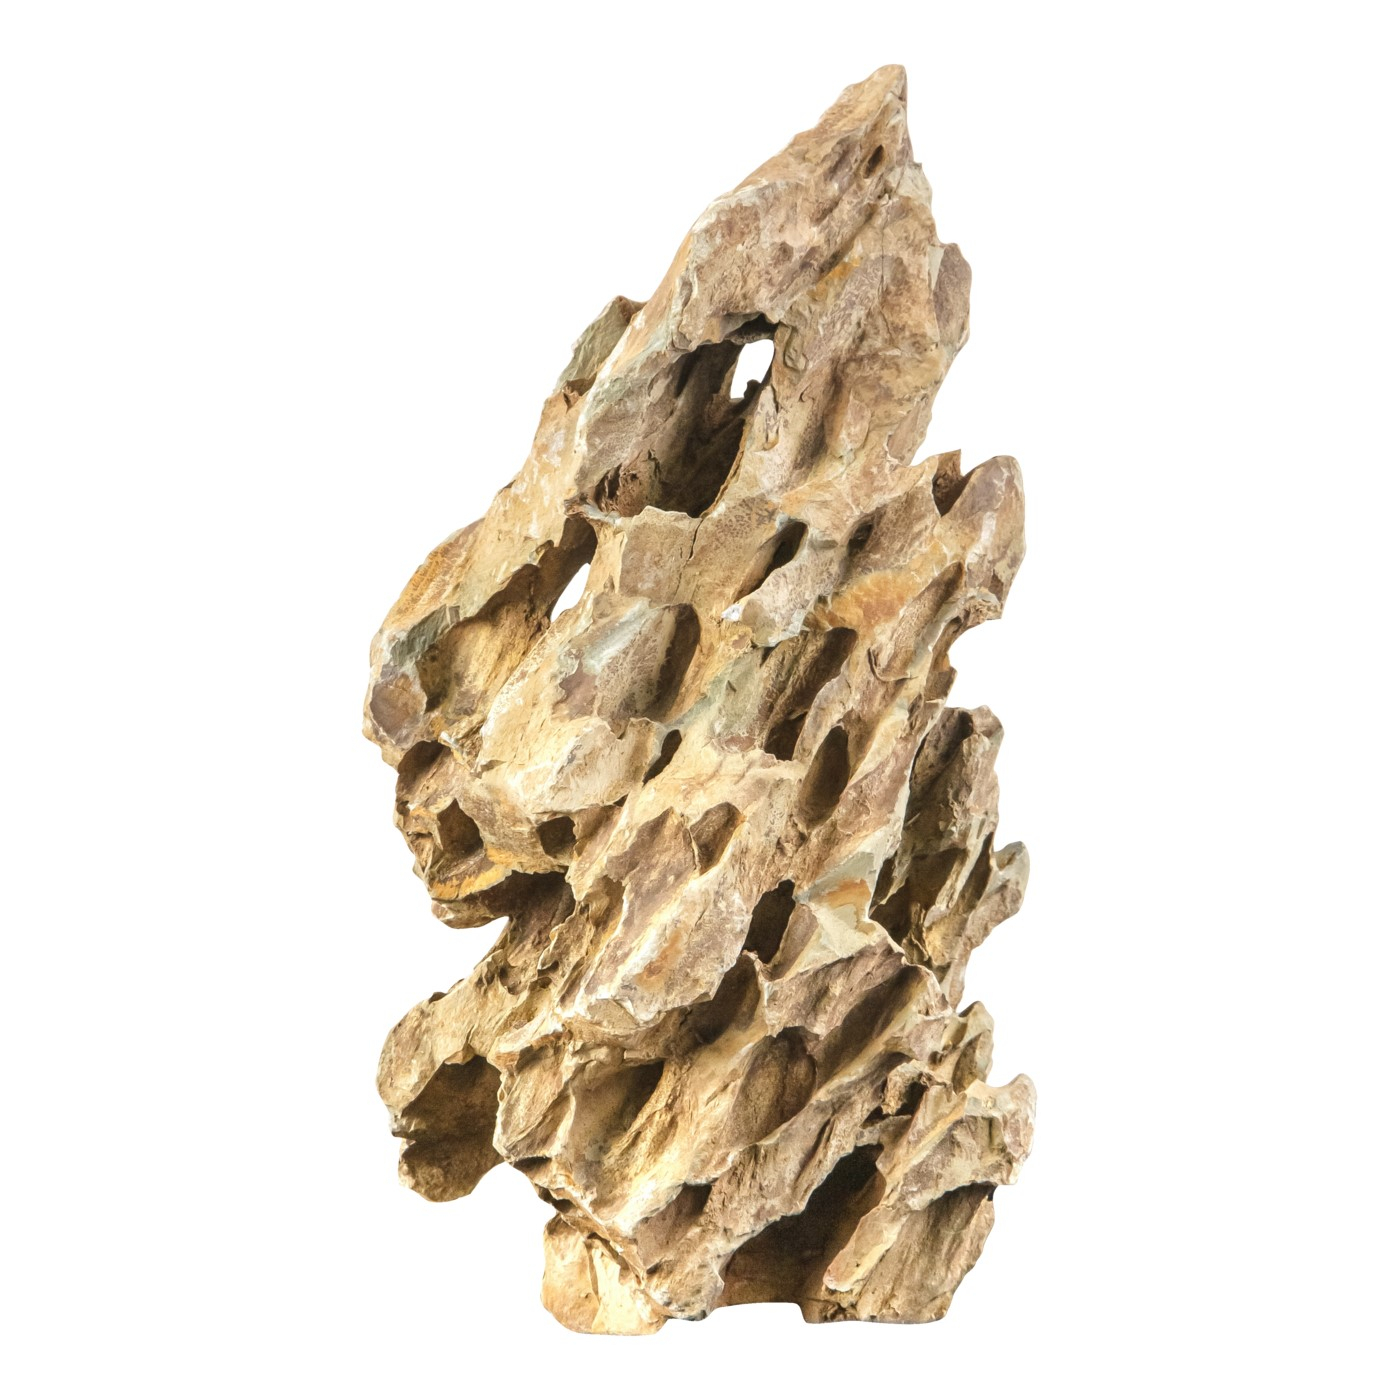 Sera Rock Dragon Stone natuurlijke rots voor aquascaping